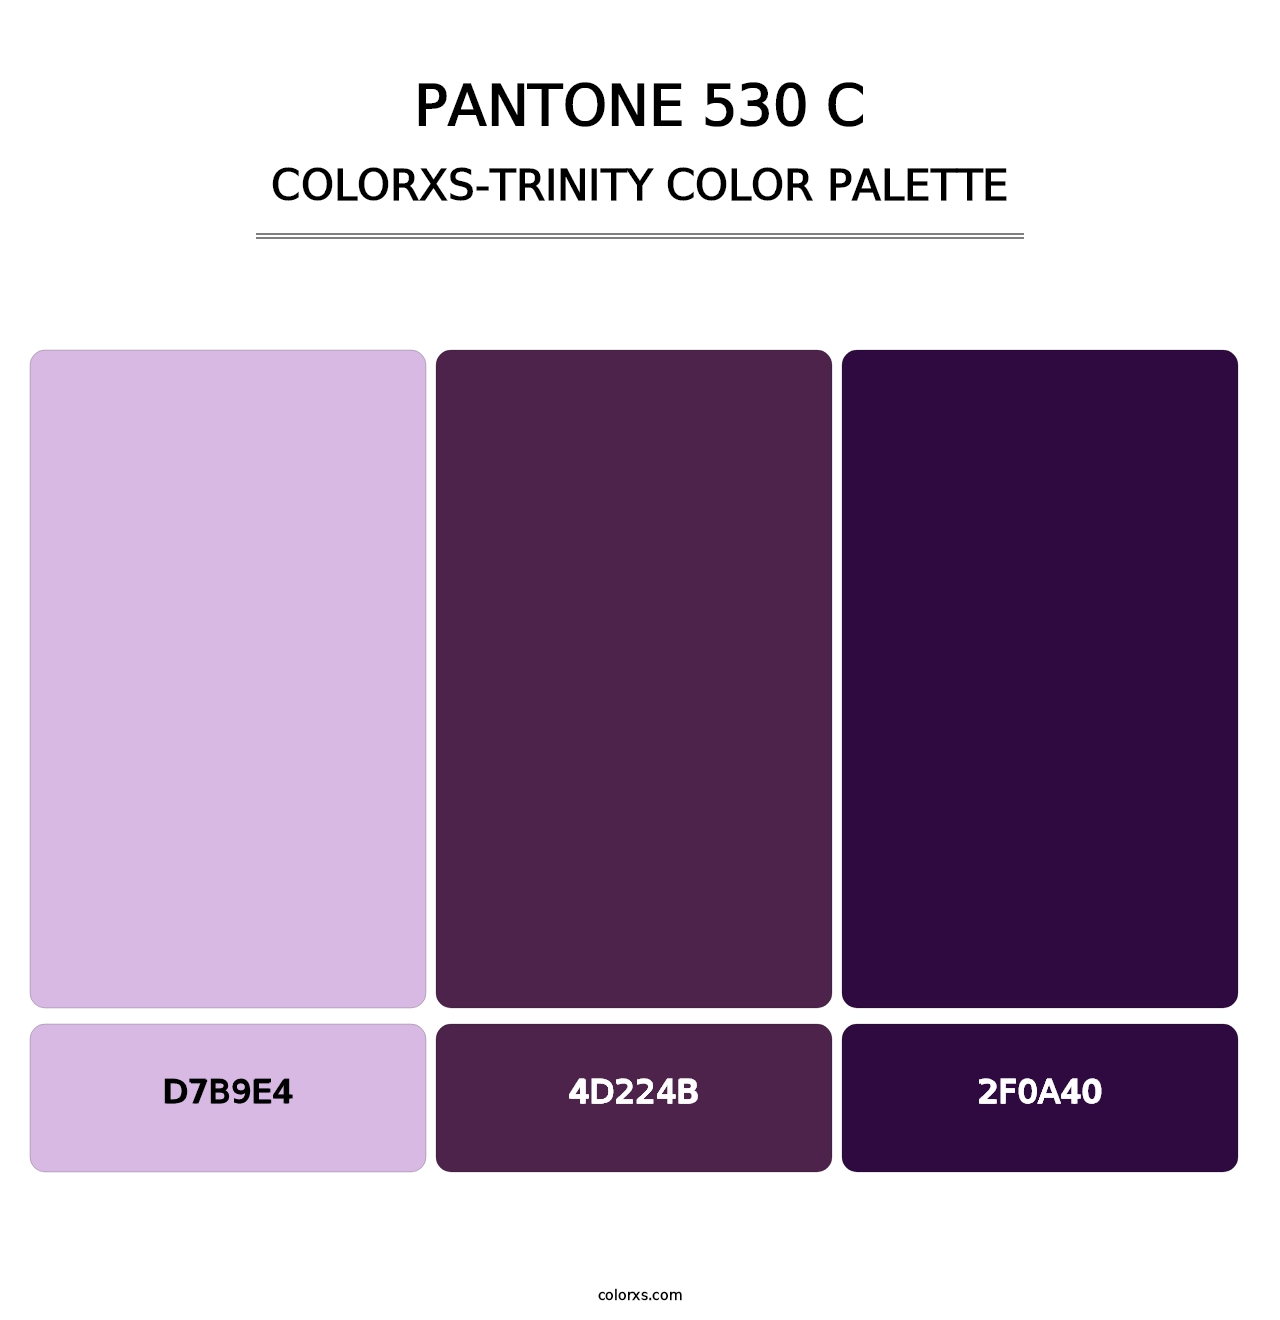 PANTONE 530 C - Colorxs Trinity Palette